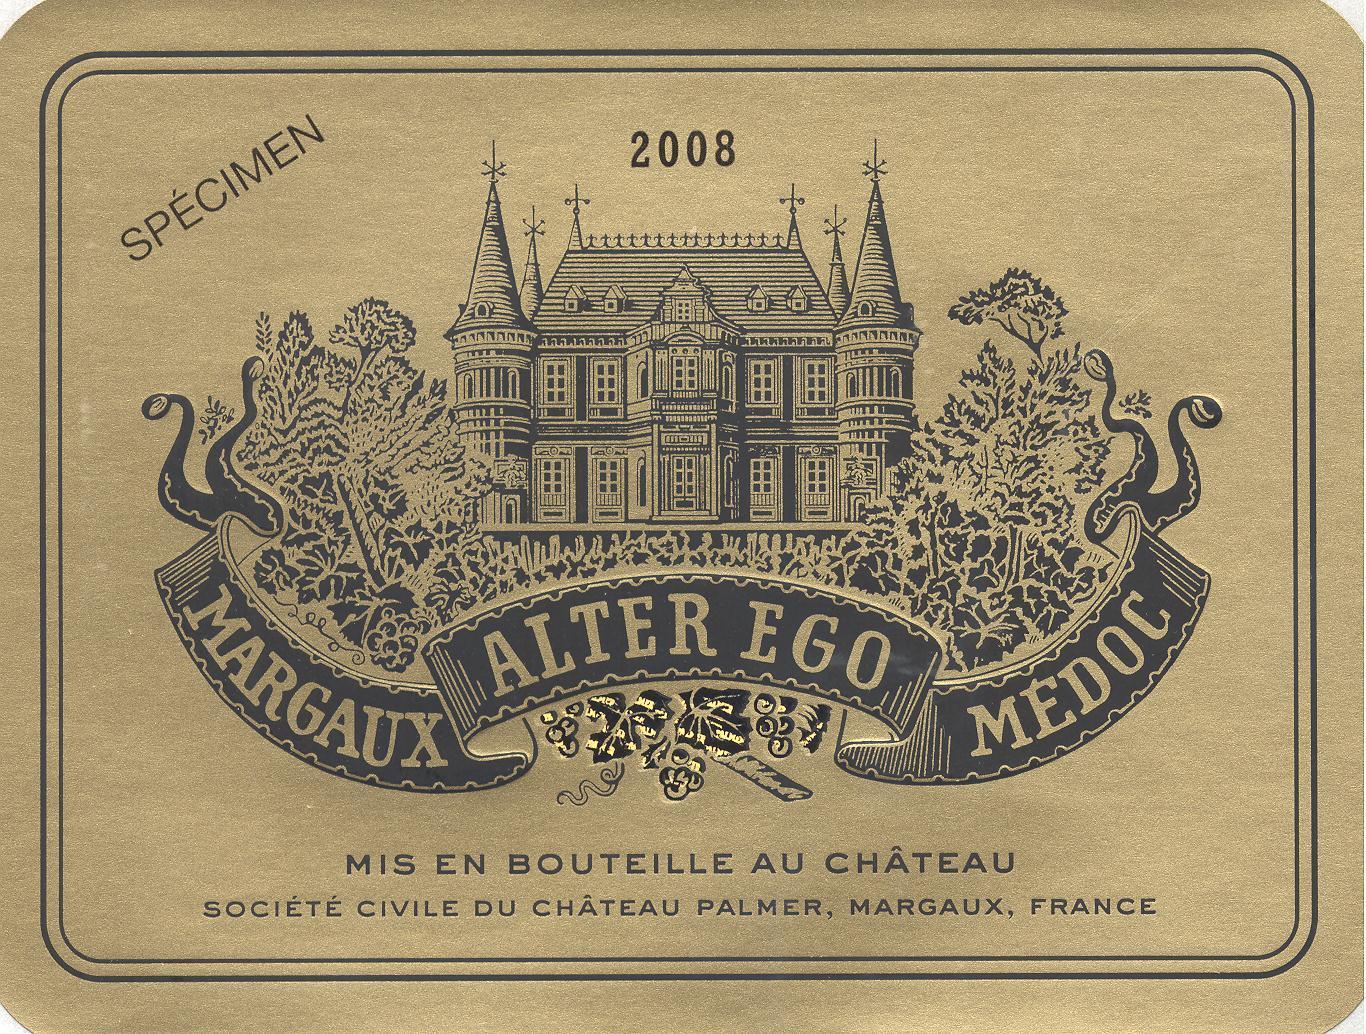 2017 Chateau Palmer Alter Ego Margaux - click image for full description